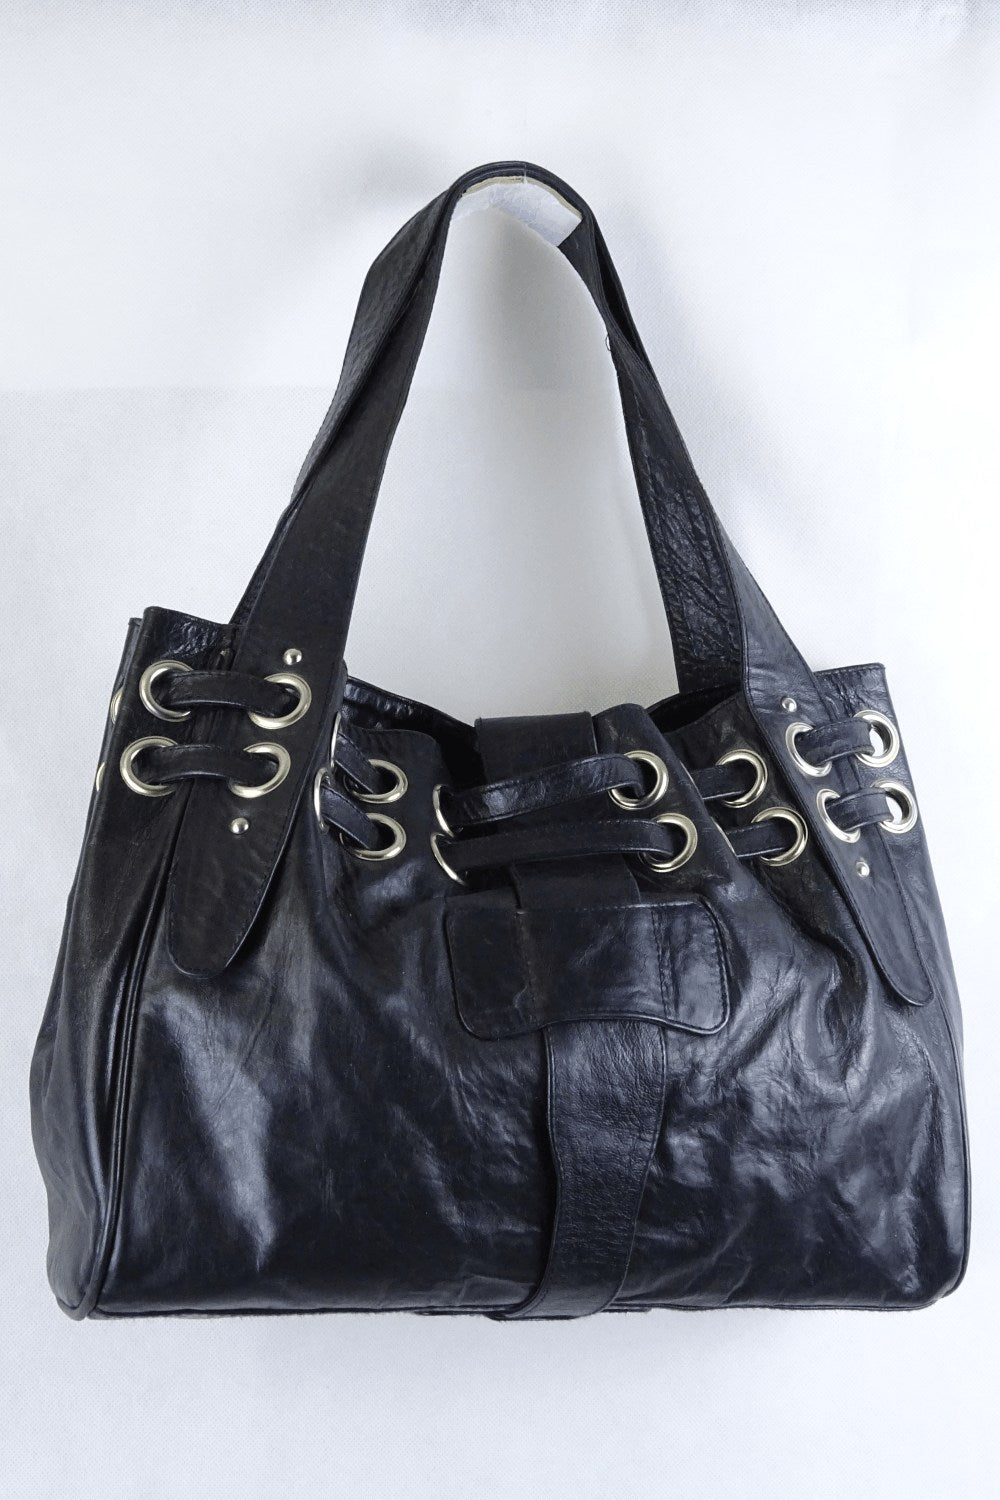 Tommy's Black Leather Handbag